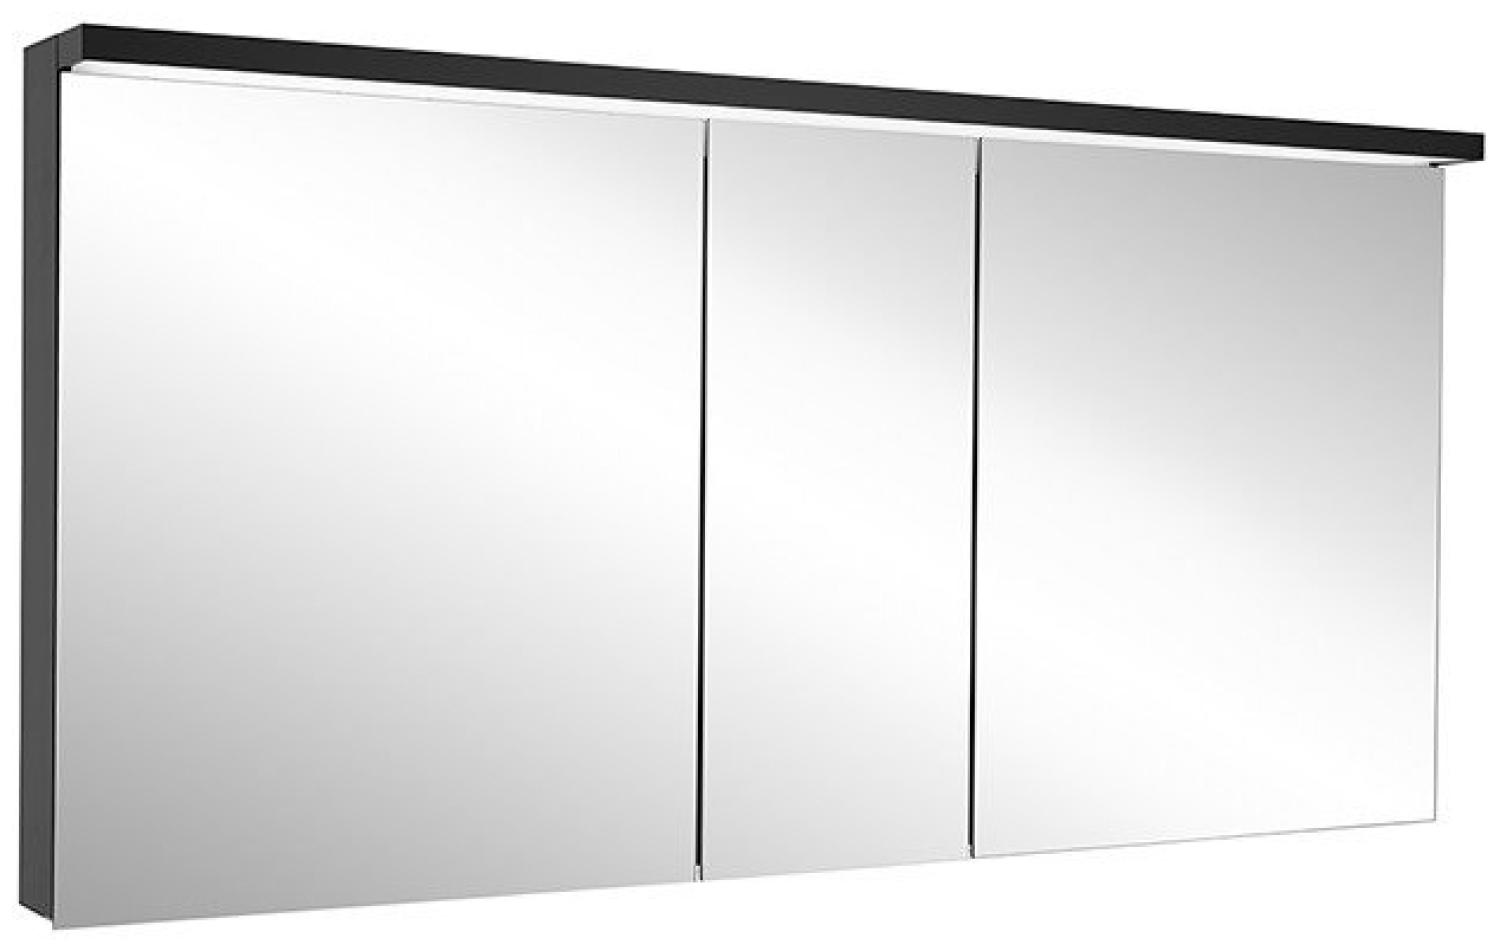 Schneider ADVANCED Line Ultimate LED Lichtspiegelschrank, 3 Türen, 149,5x72,6x17,8cm, 188. 150, Ausführung: EU-Norm/Korpus schwarz matt - 188. 150. 02. 41 Bild 1